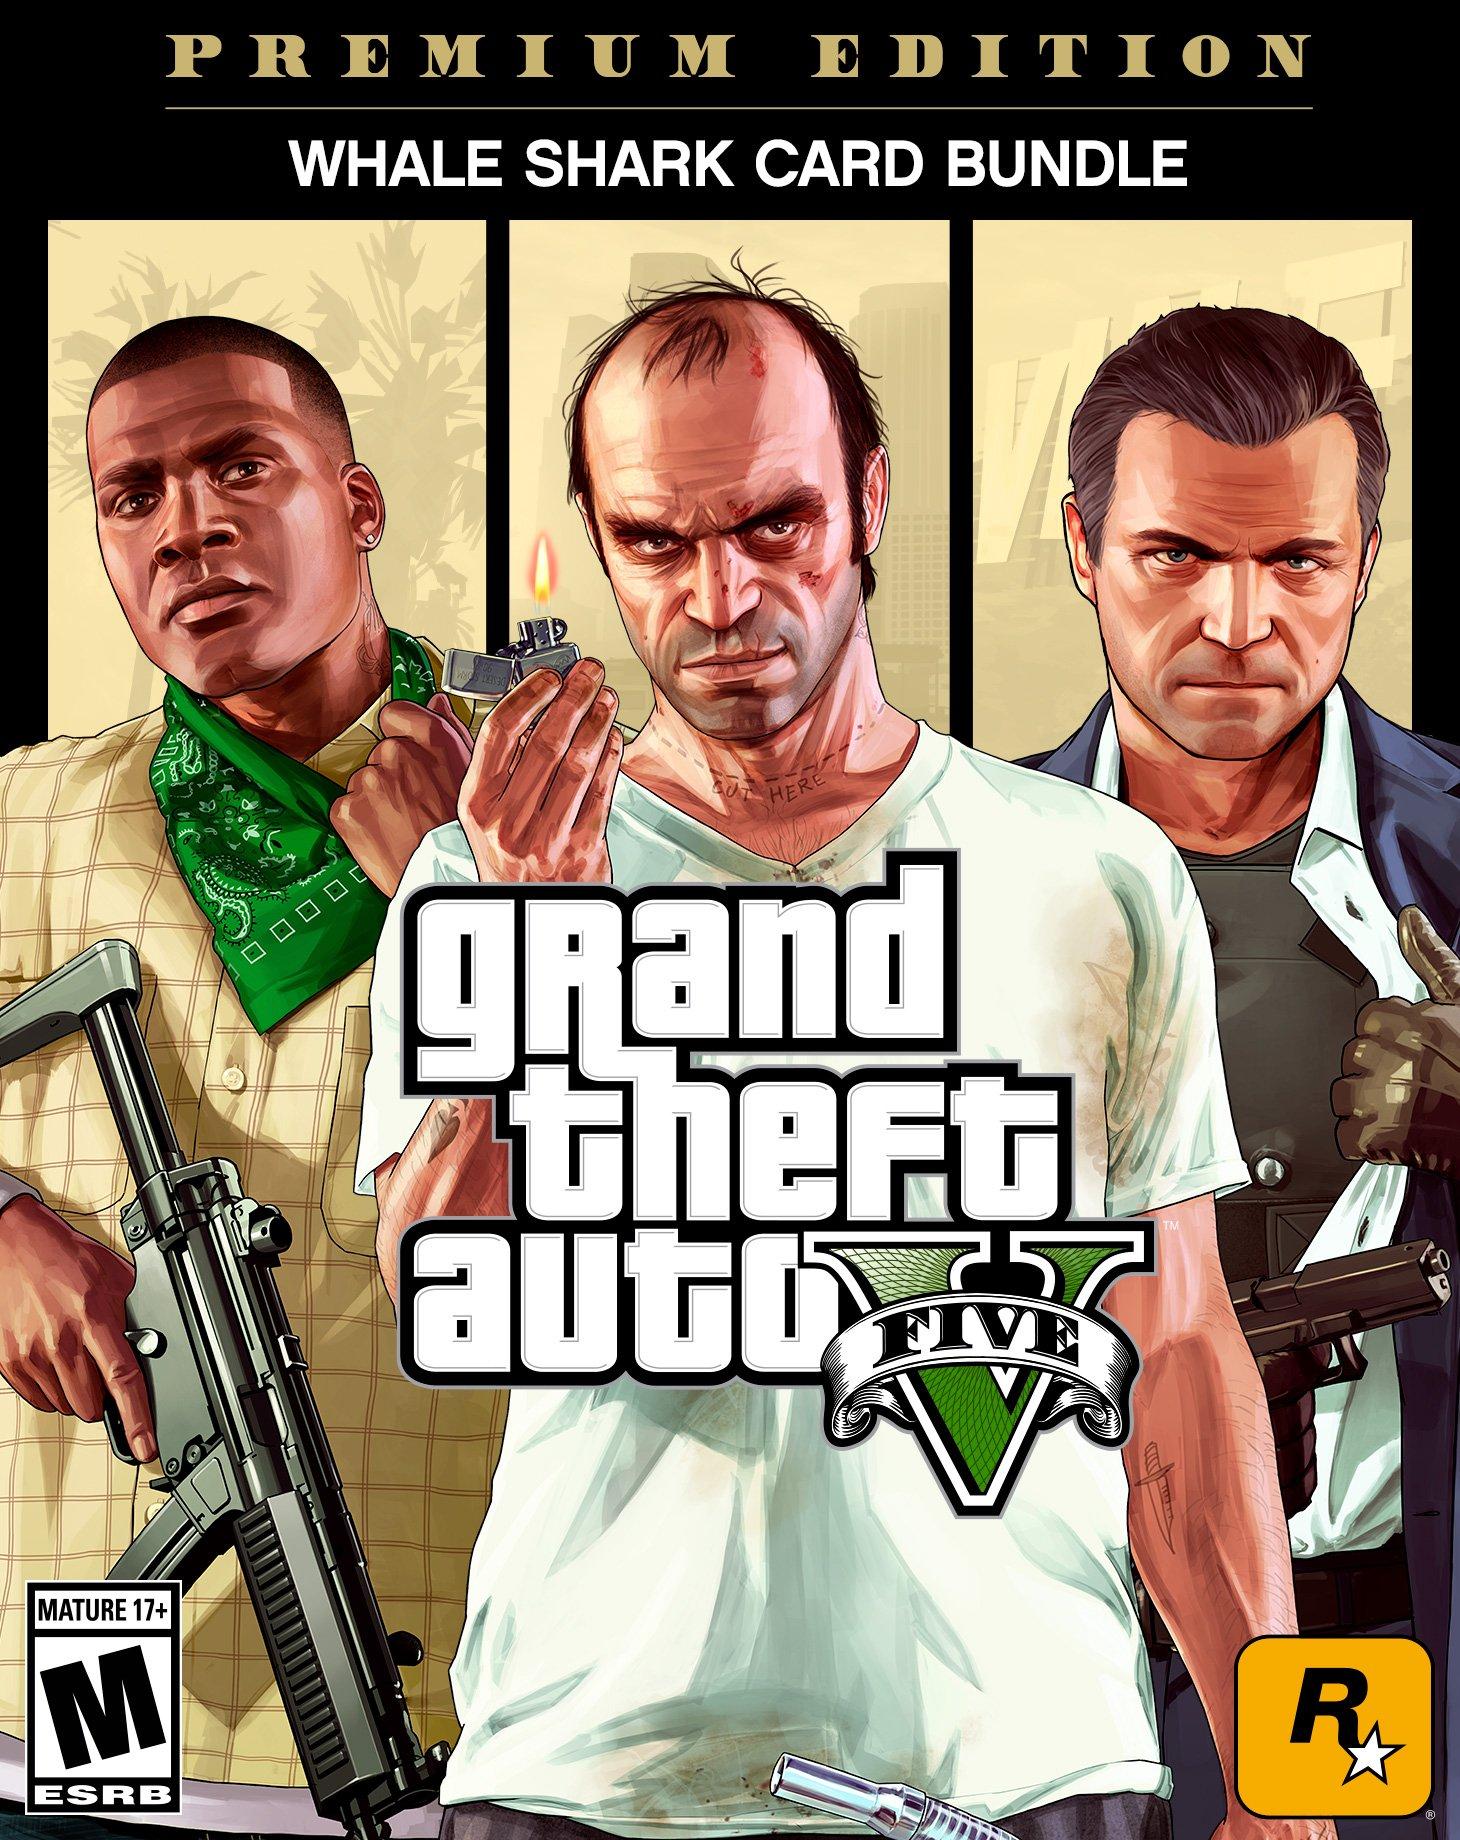 Grand Theft Auto V: Premium Edition and Whale Shark Card Bundle